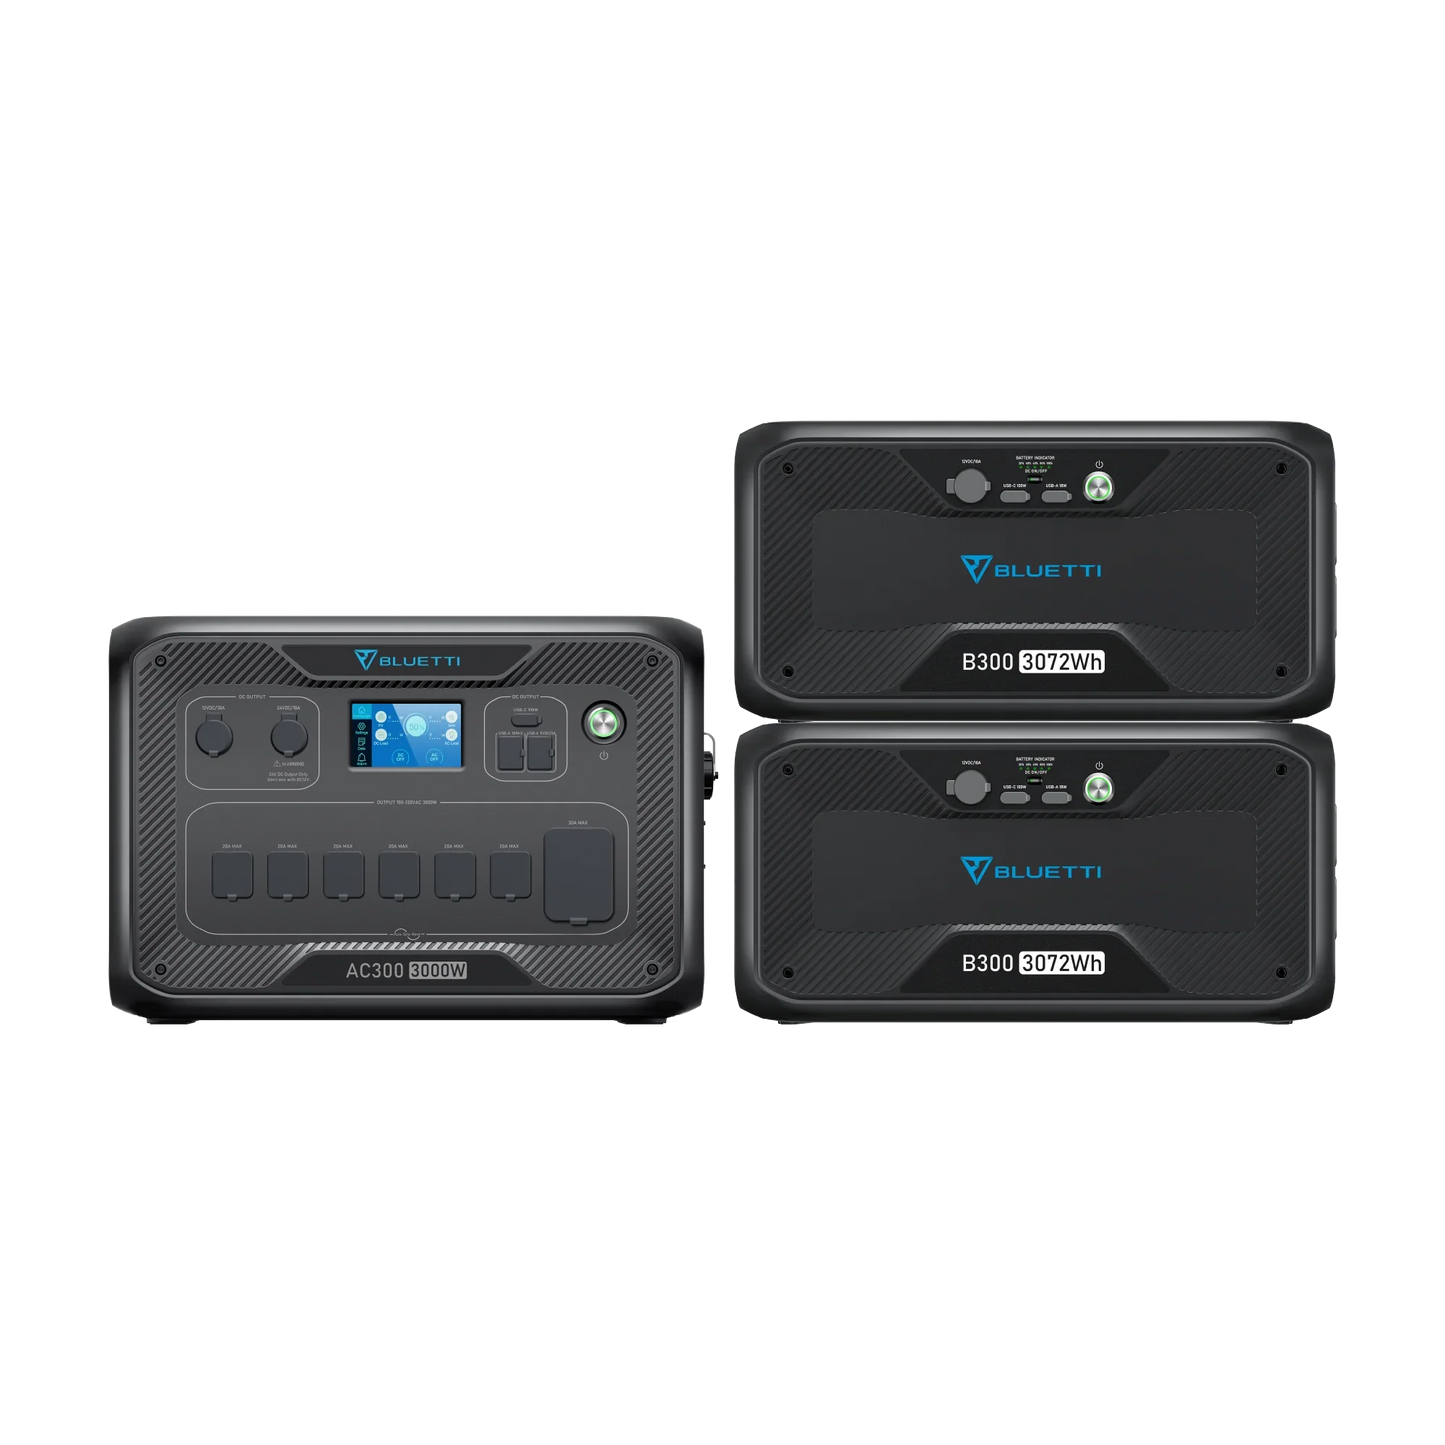 BLUETTI AC300 + 2*B300 Home Battery Backup (Free Shipping)